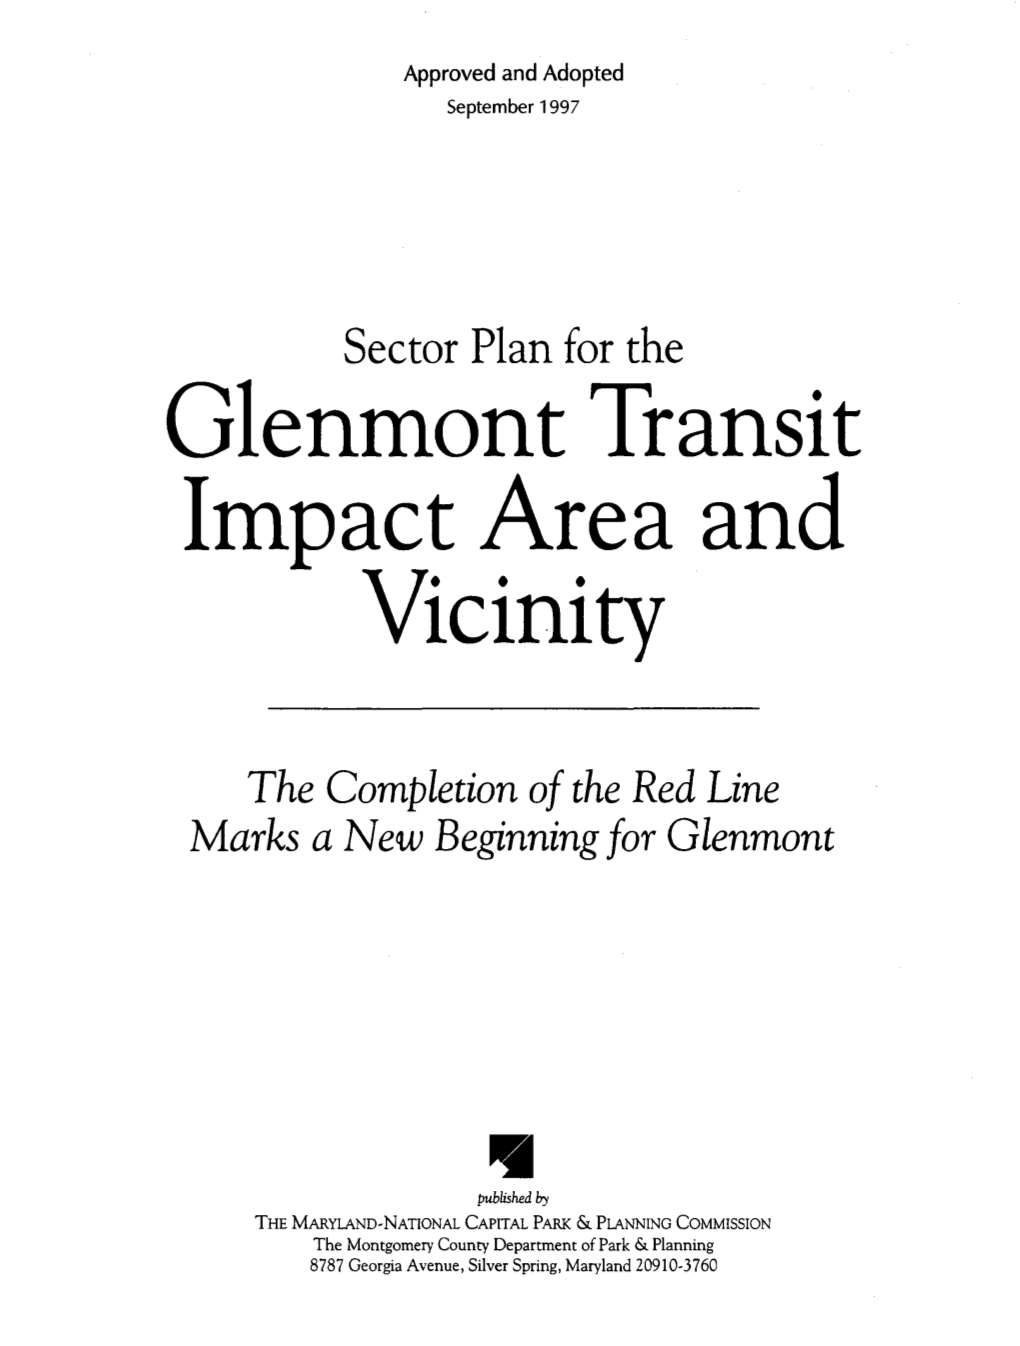 Glenmont Transit Impact Area and Vicinity